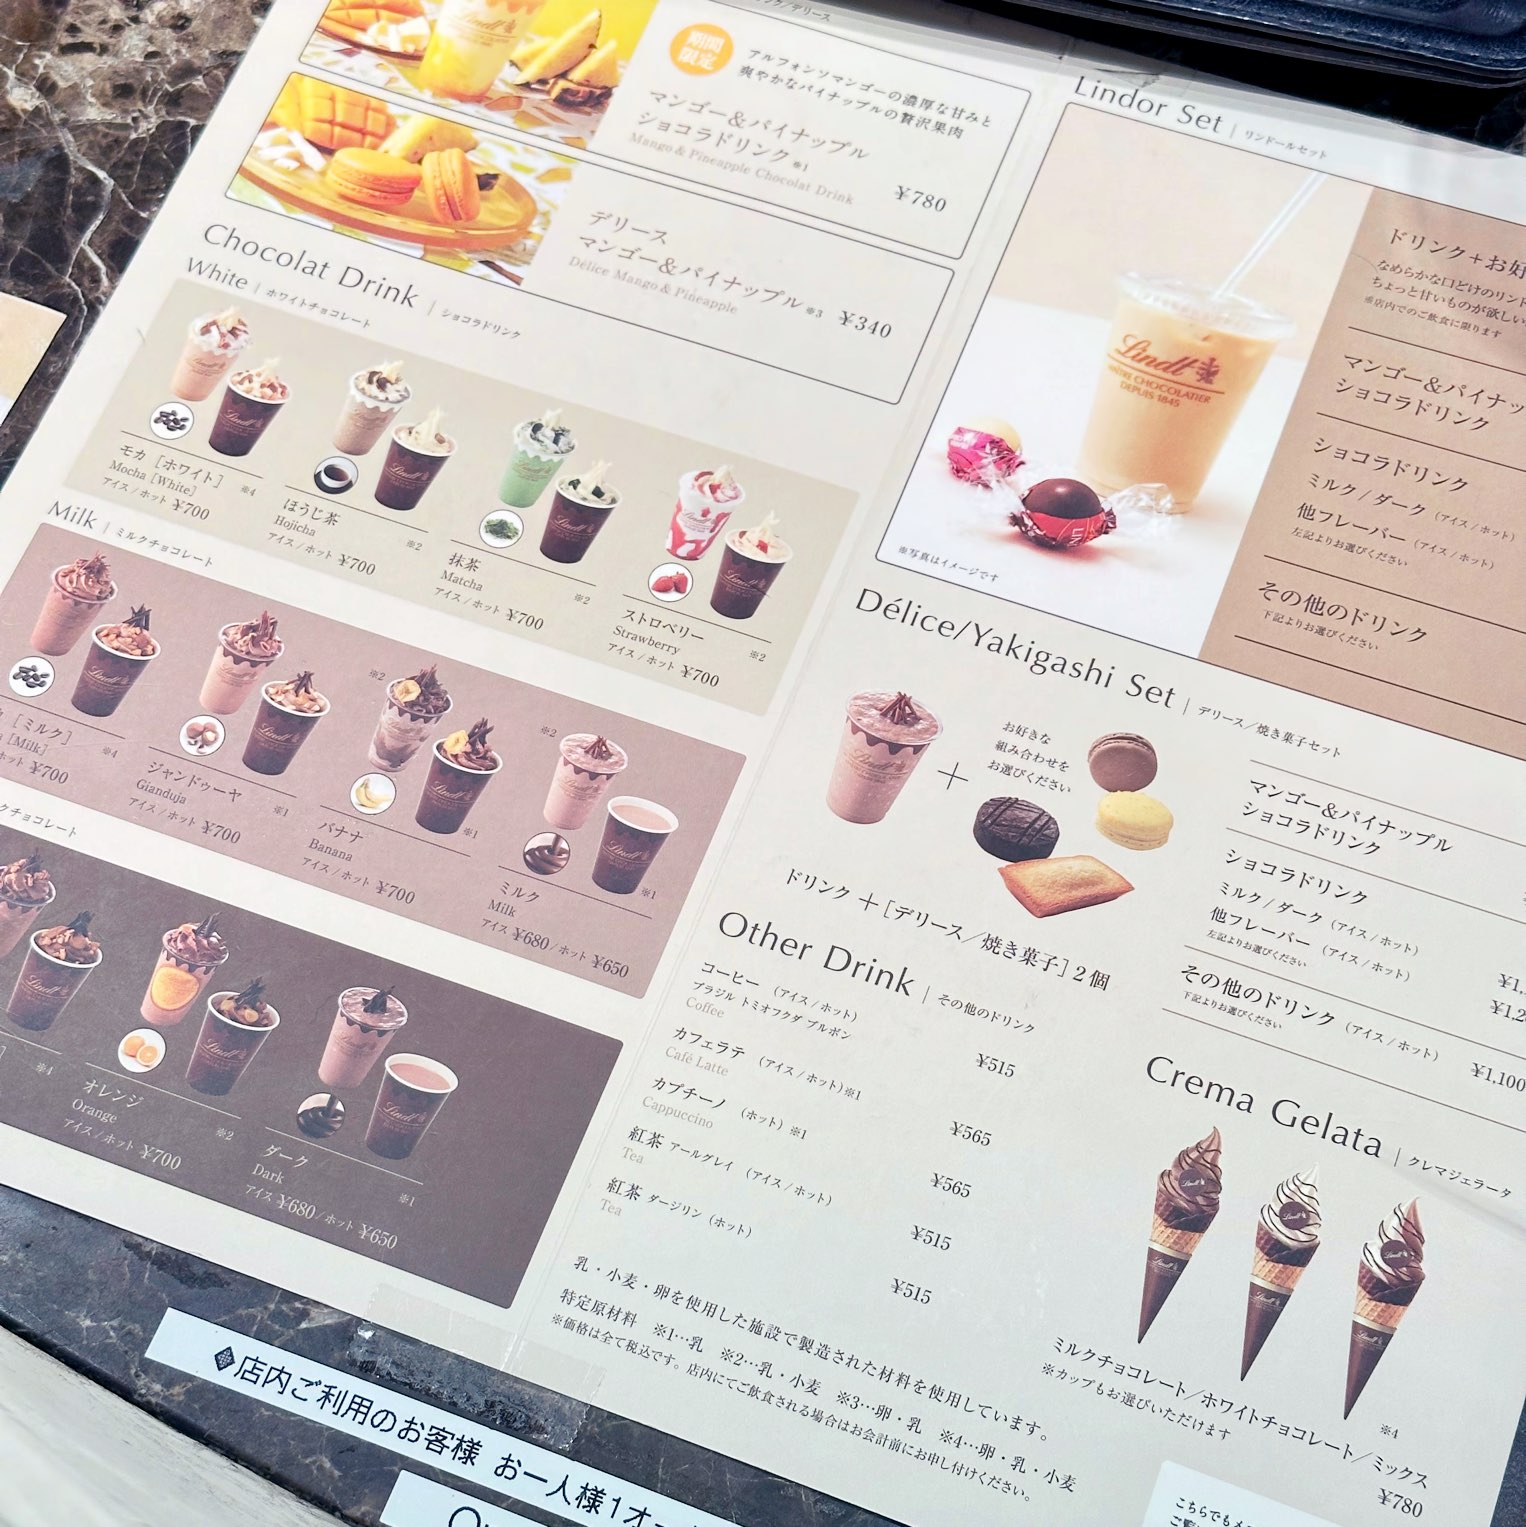 SANRIO CAFE Ikebukuro Shop - What to Eat, Access, Hours & Price